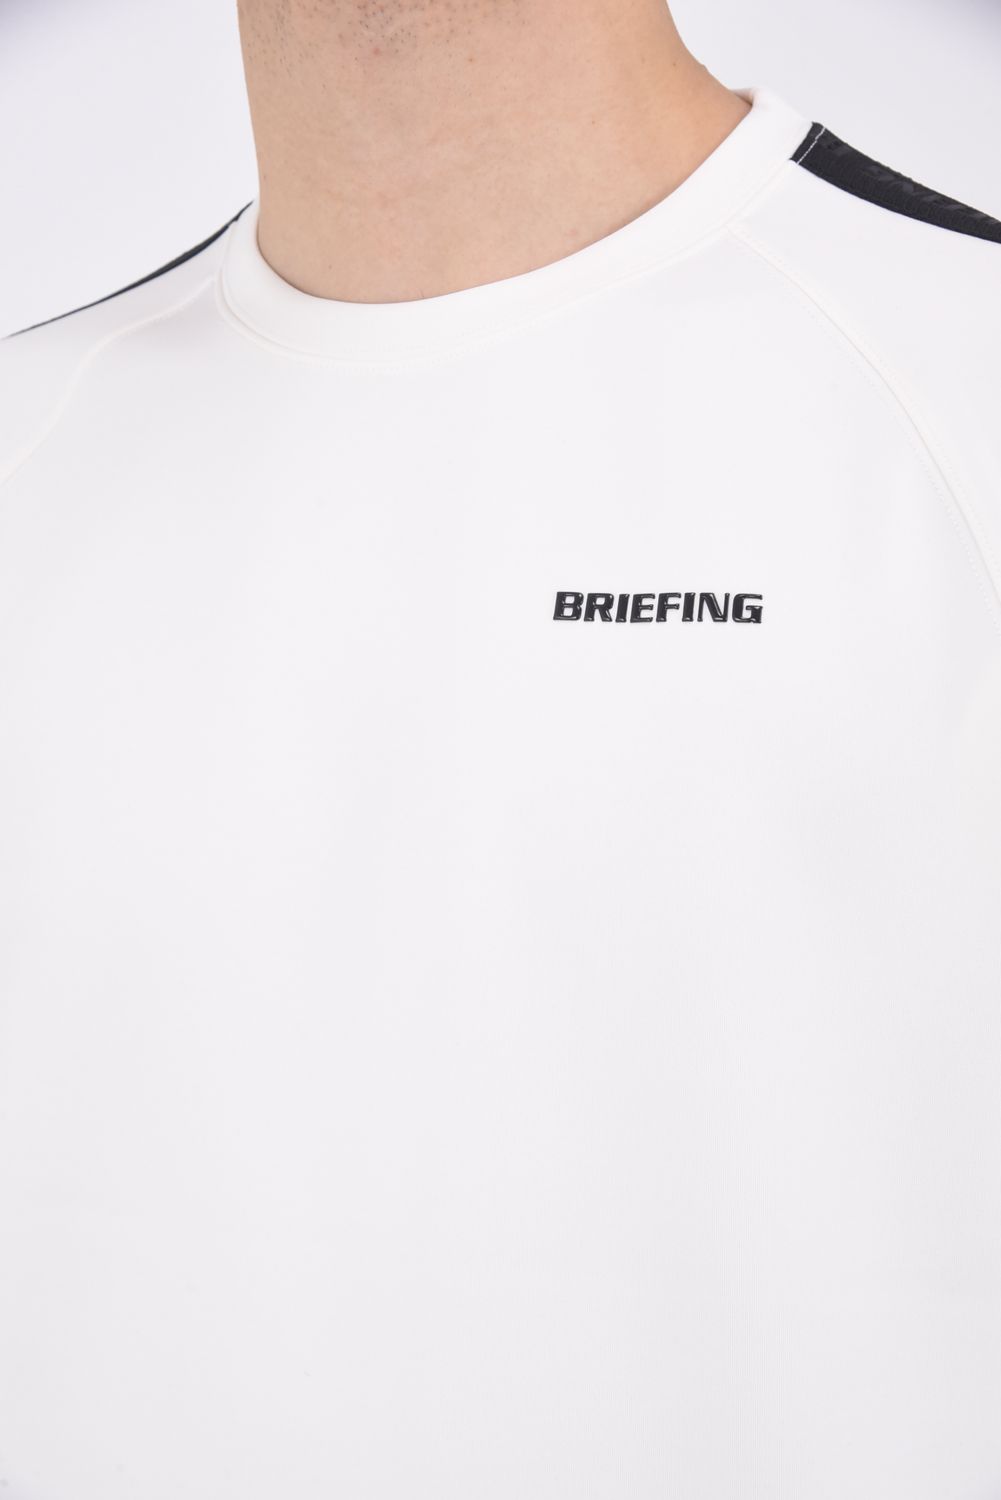 BRIEFING - 【24SS】 MENS SIDE LOGO LINE CREWNECK / サイドロゴ 